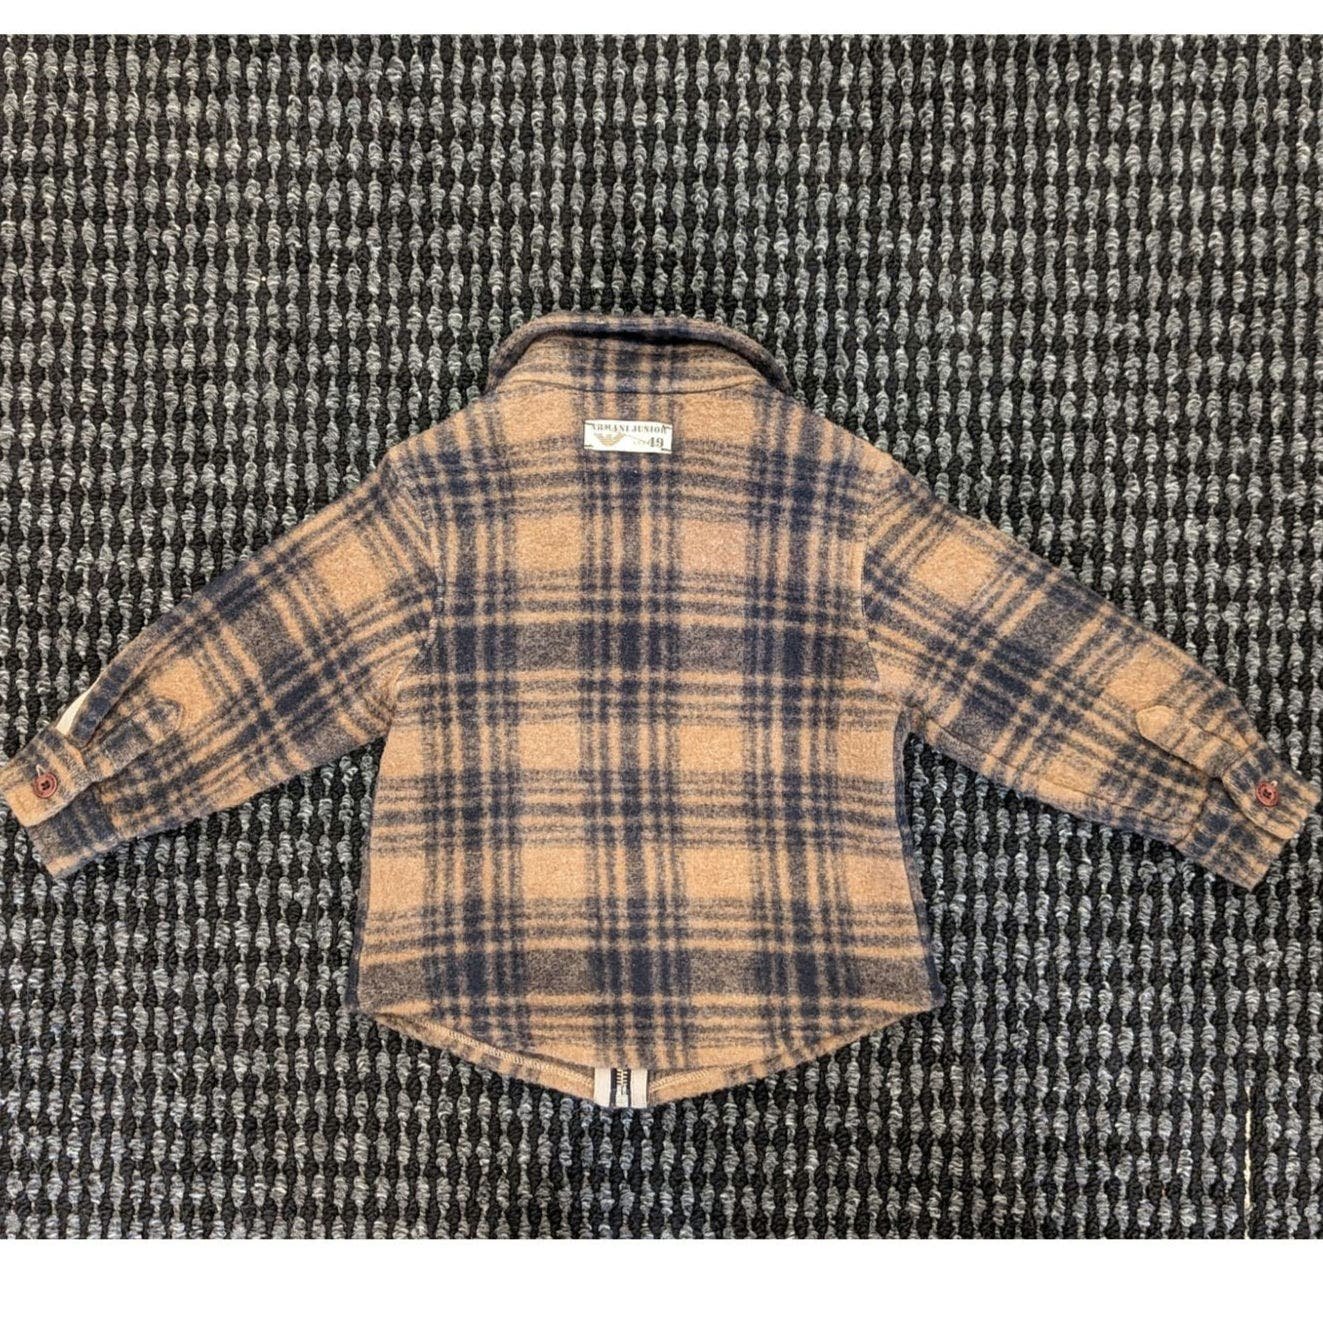 Armani Junior Flannel Jacket size 2A Toddler FRc7ymmkf